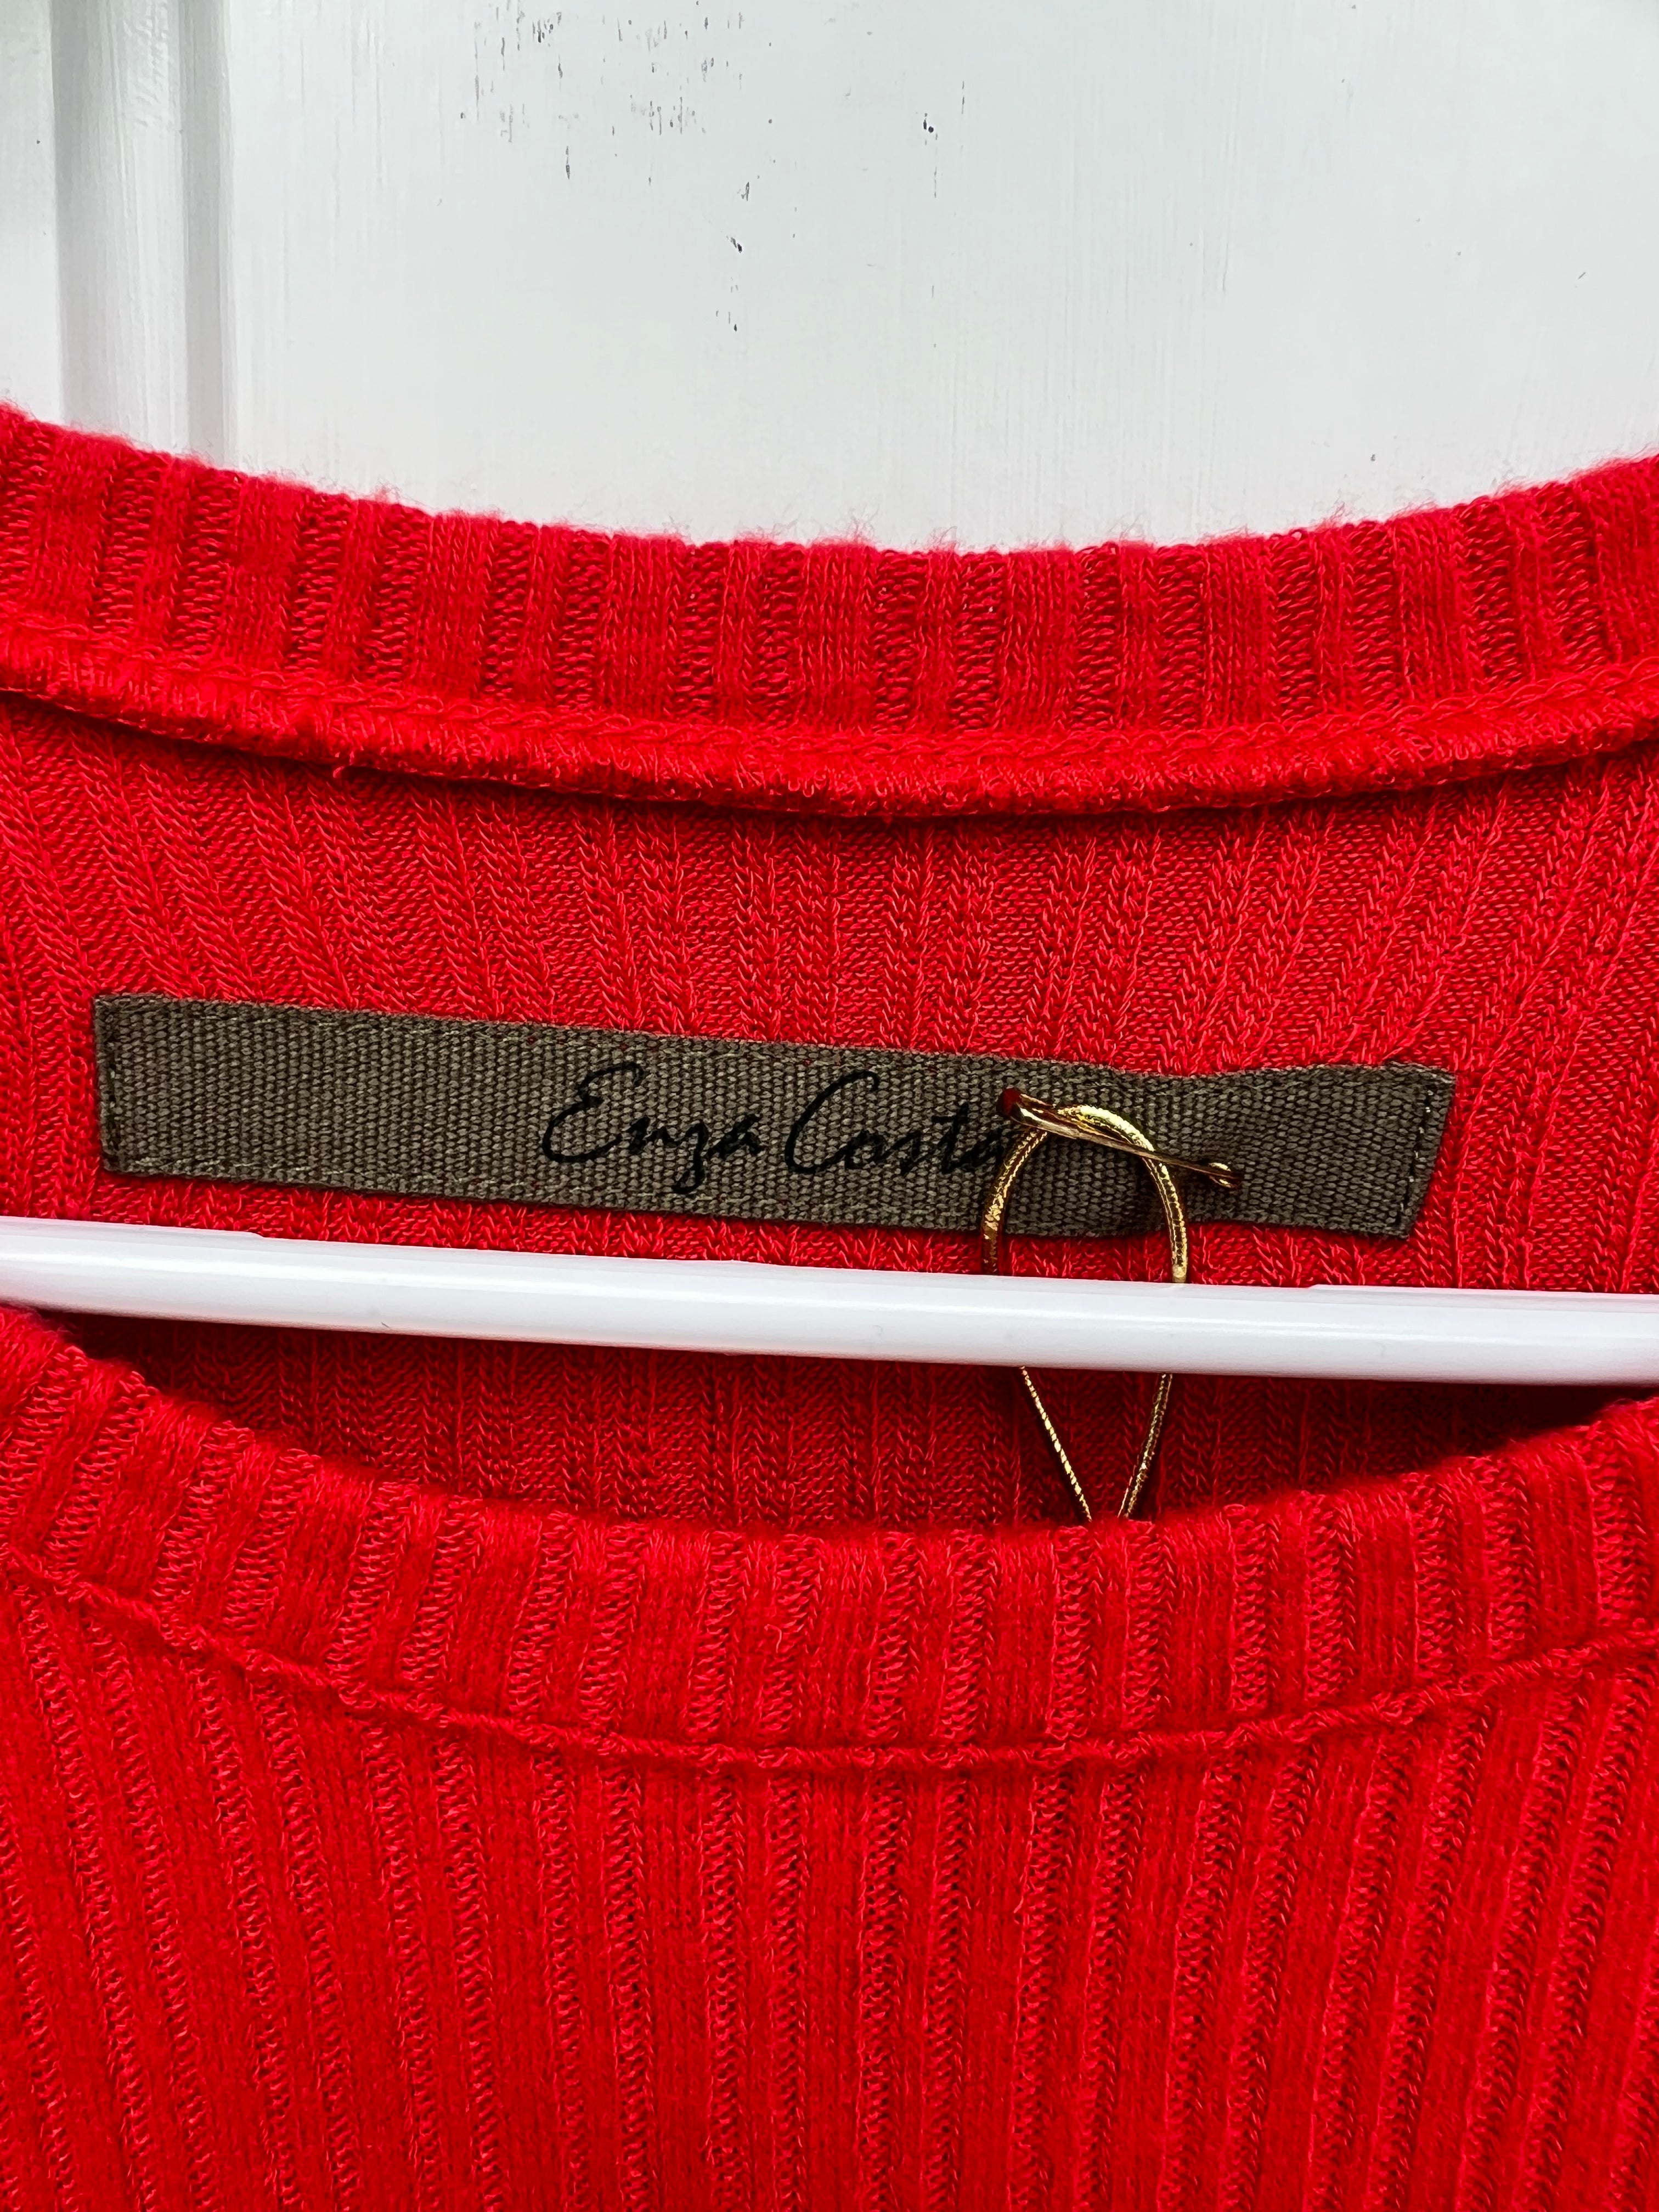 NWT Red Enzo Costa Rib Volume Sleeve mini Dress size Small